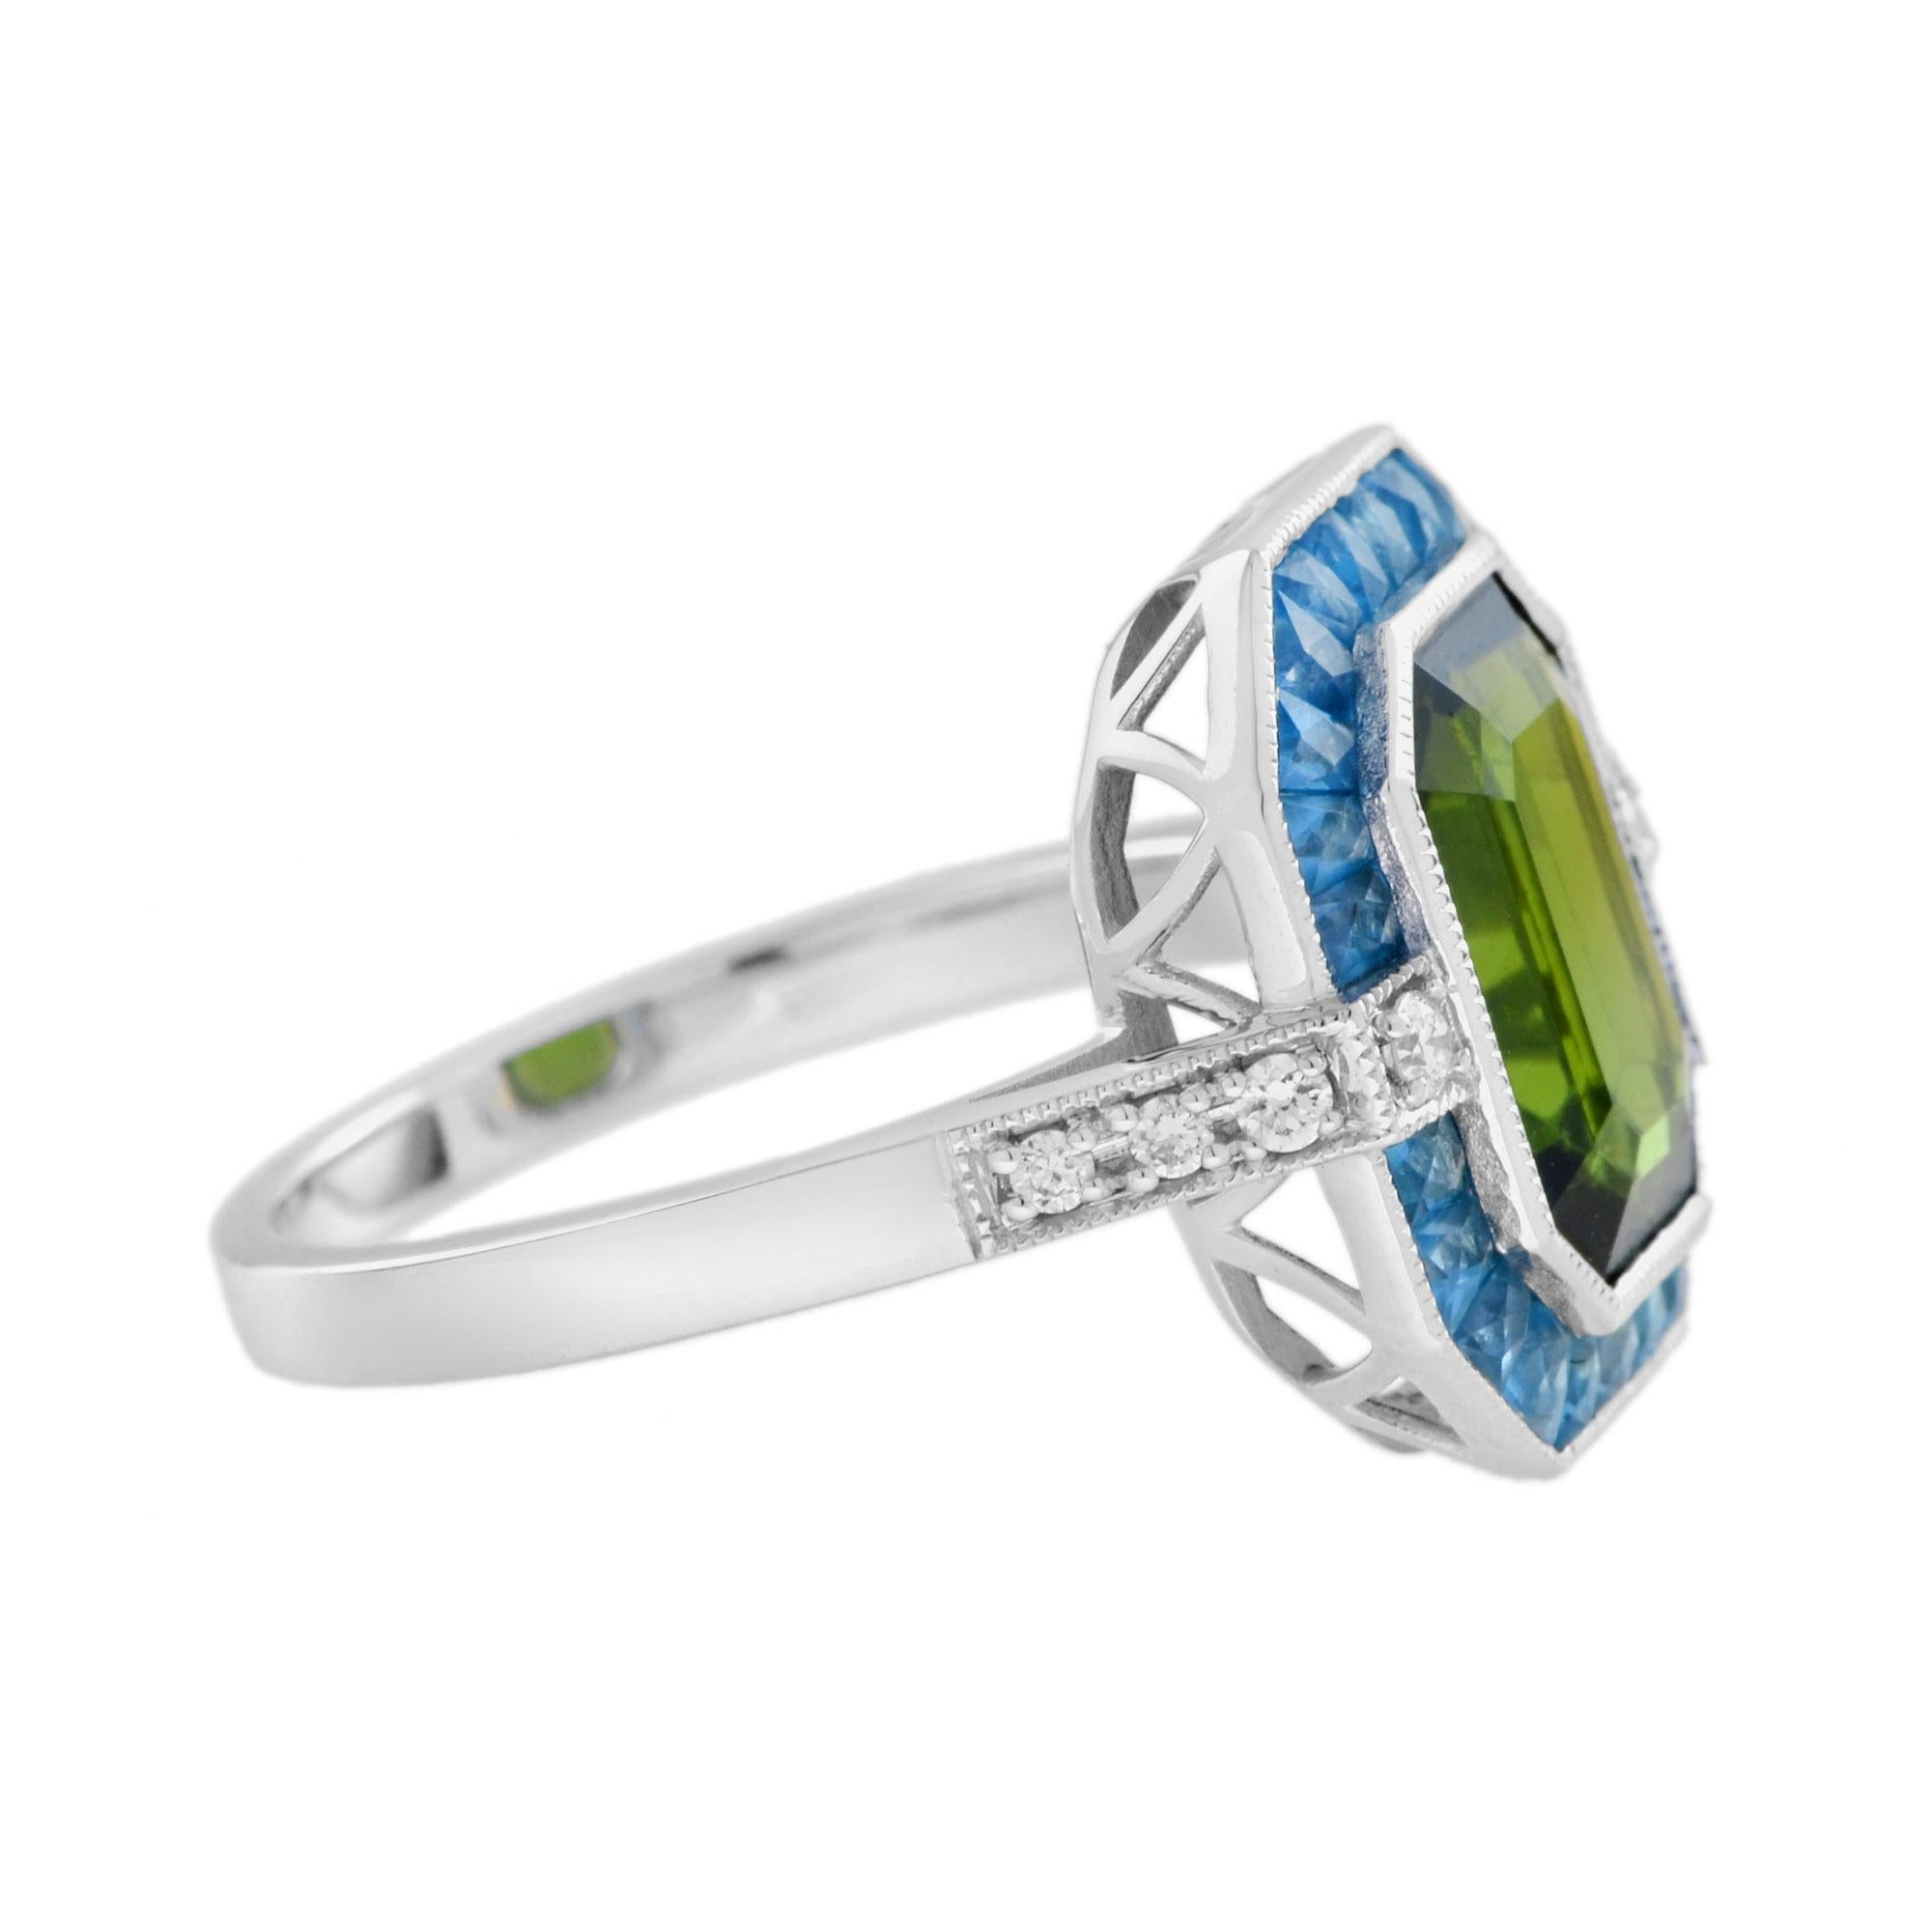 Certified Green Tourmaline London Blue Topaz Diamond Halo Ring in 14K White Gold For Sale 1